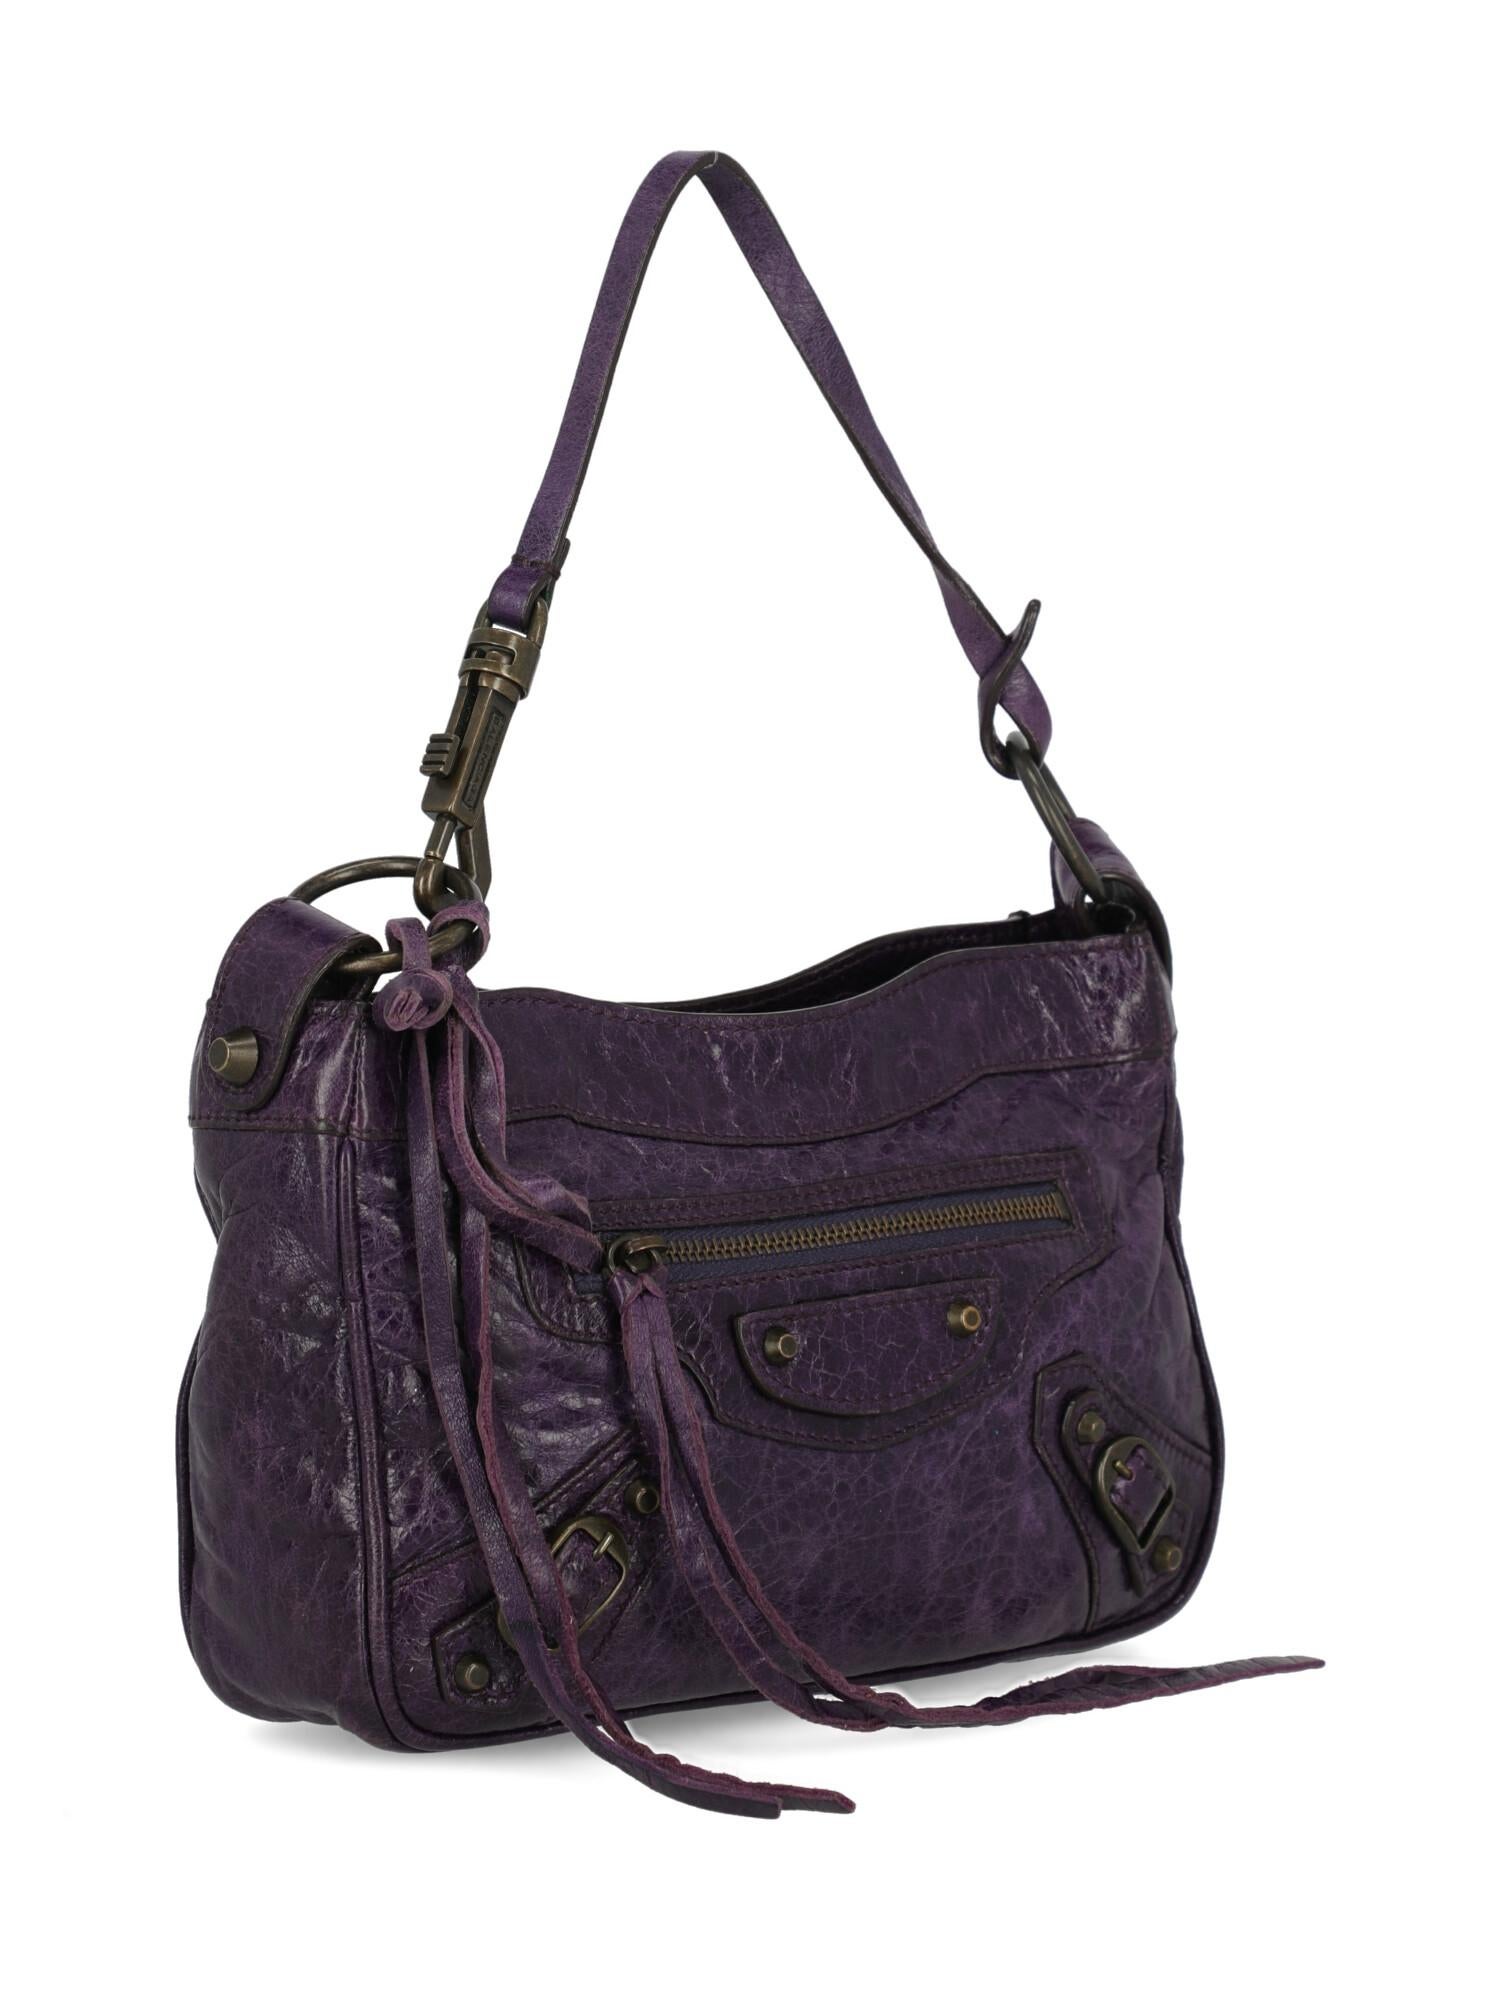 Black Balenciaga Woman Handbag Purple Leather For Sale